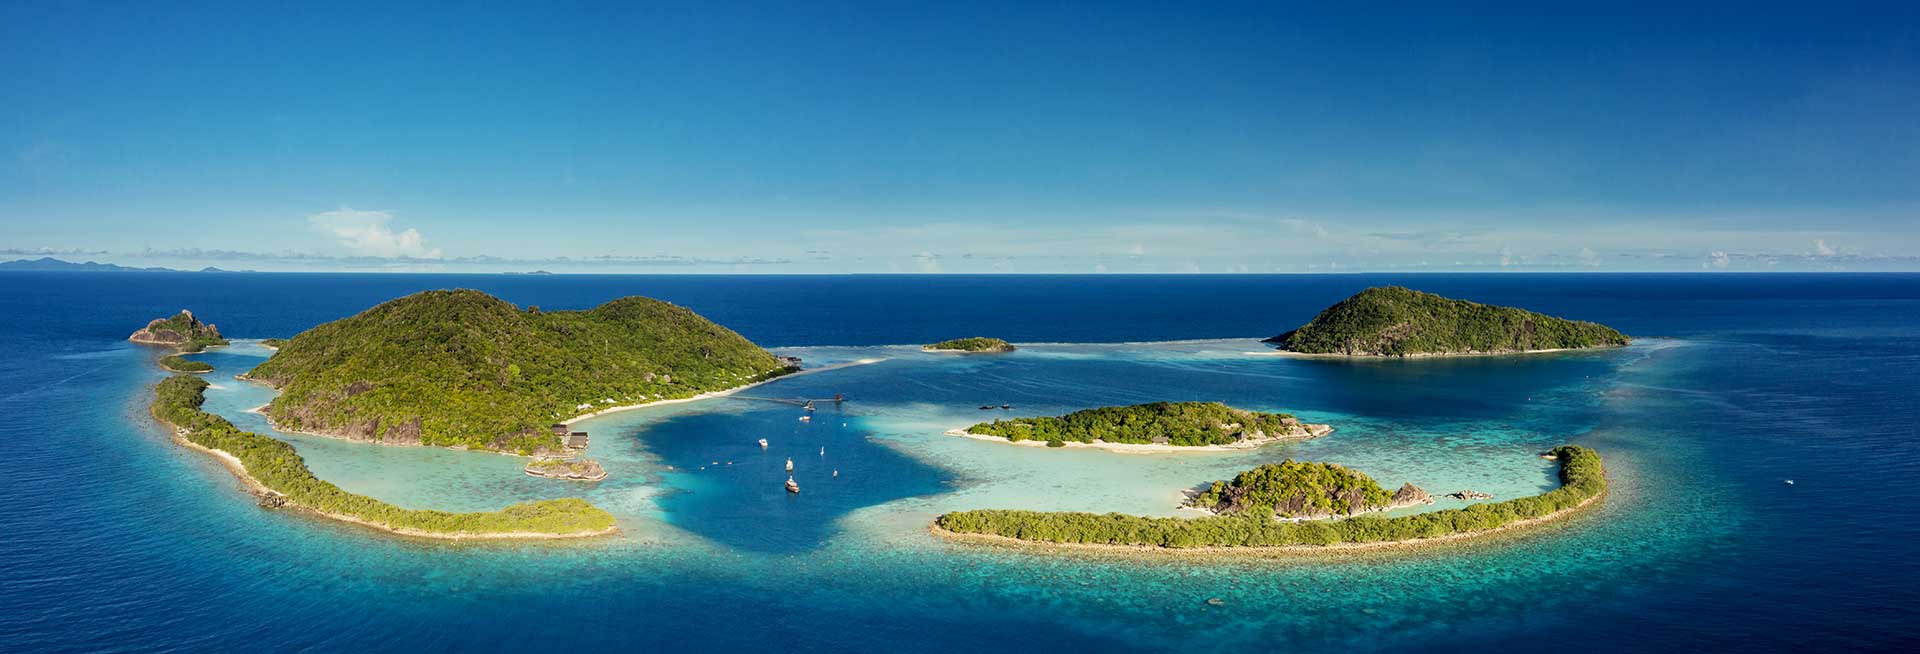 aerial-view-bawah-reserve-six-islands